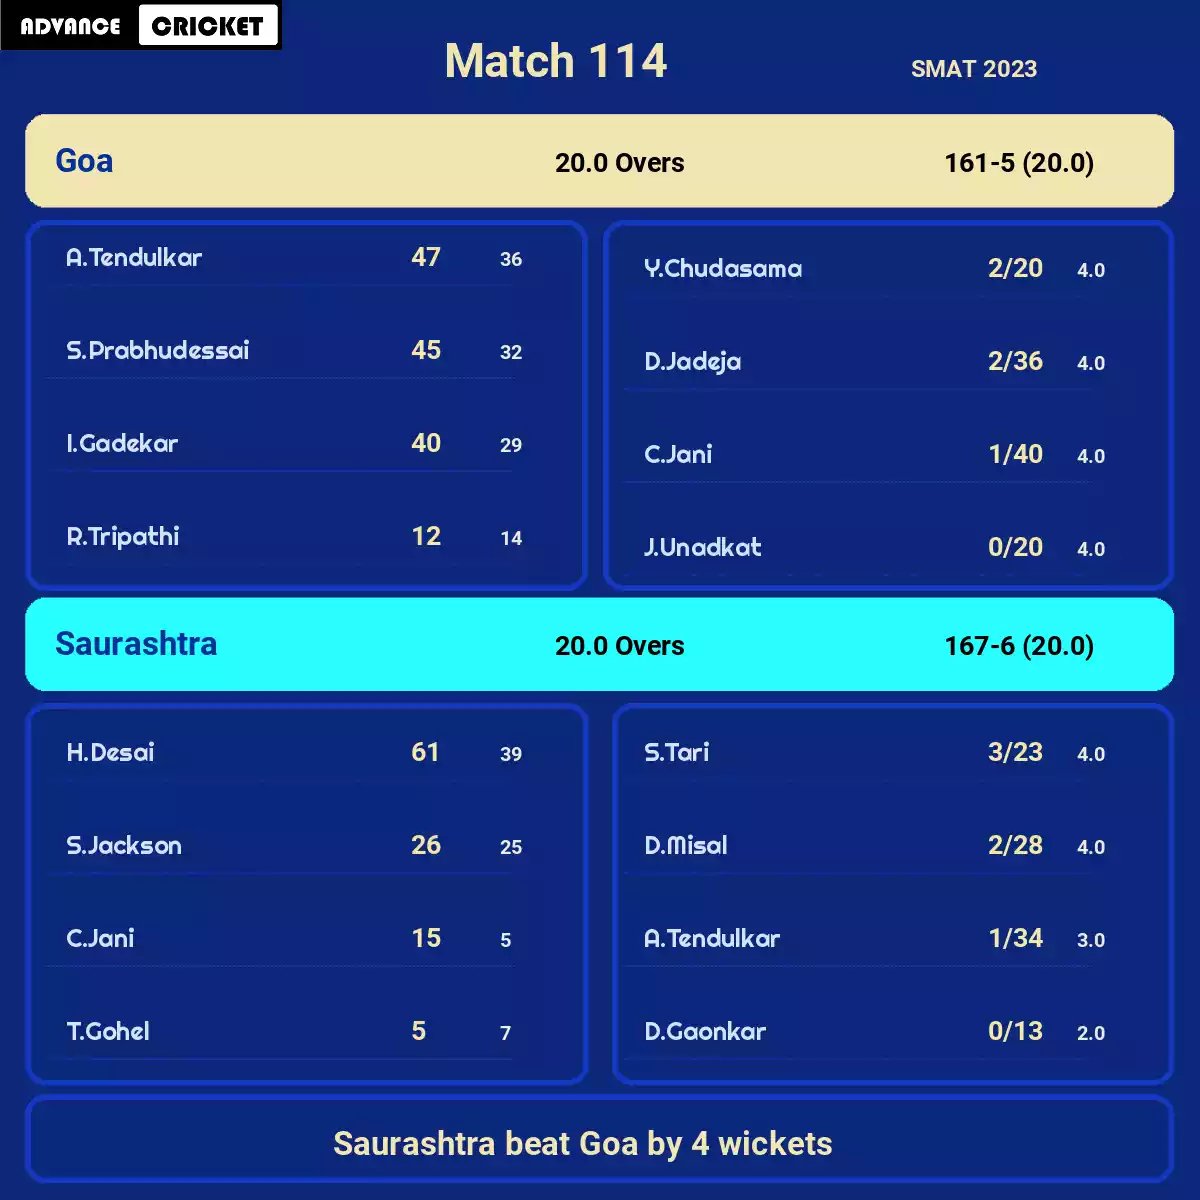 GOA vs SAU Match 114 SMAT 2023